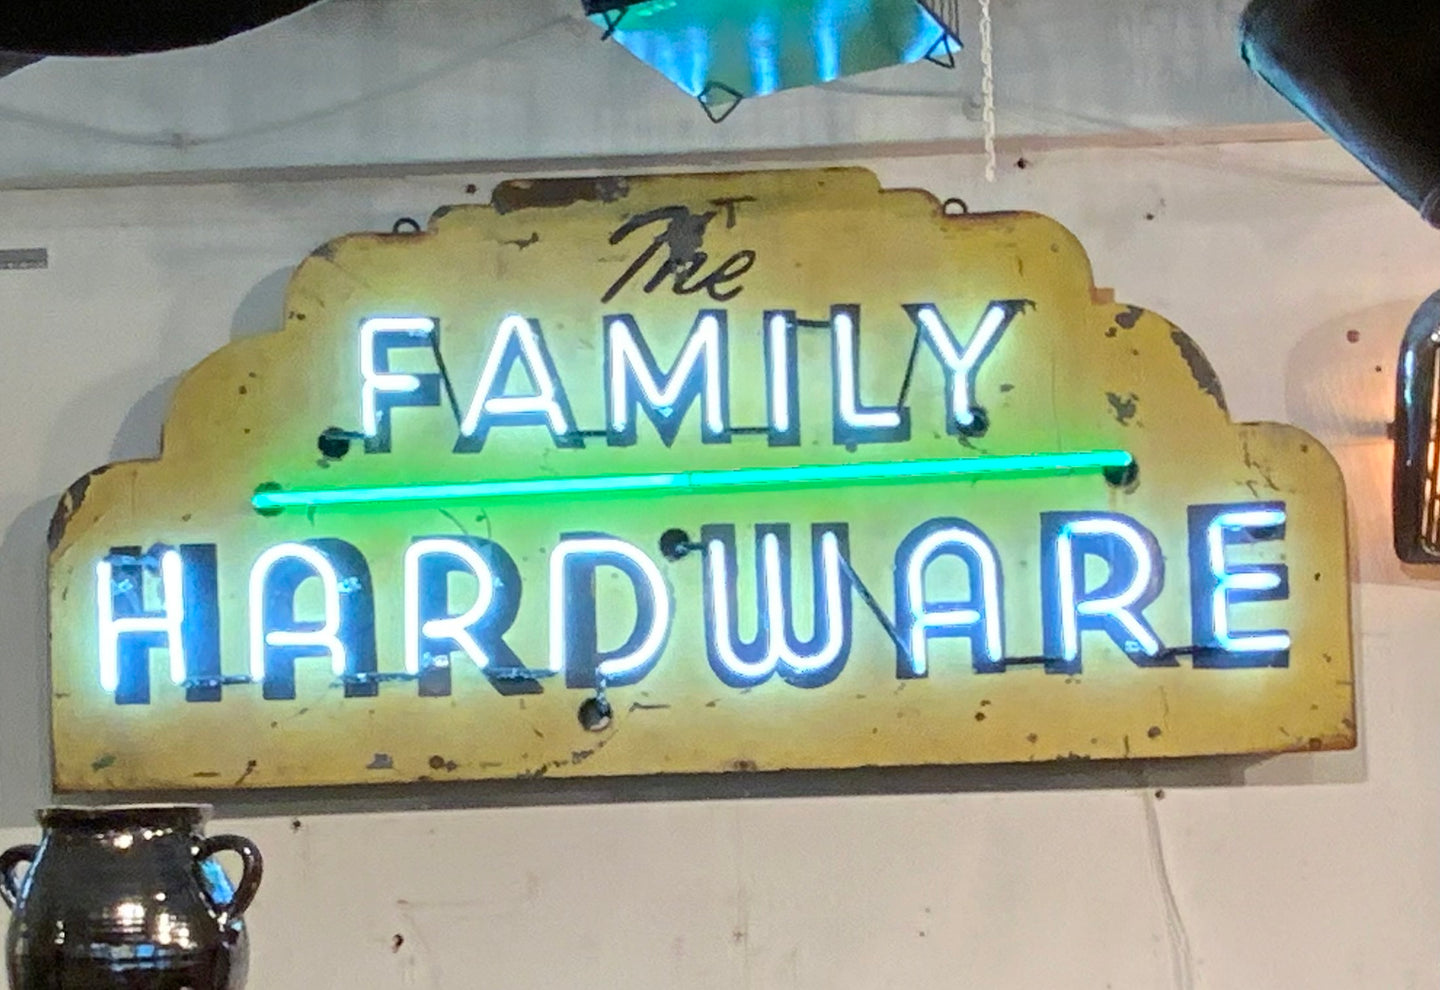 Neon Sign “Family Hardware”